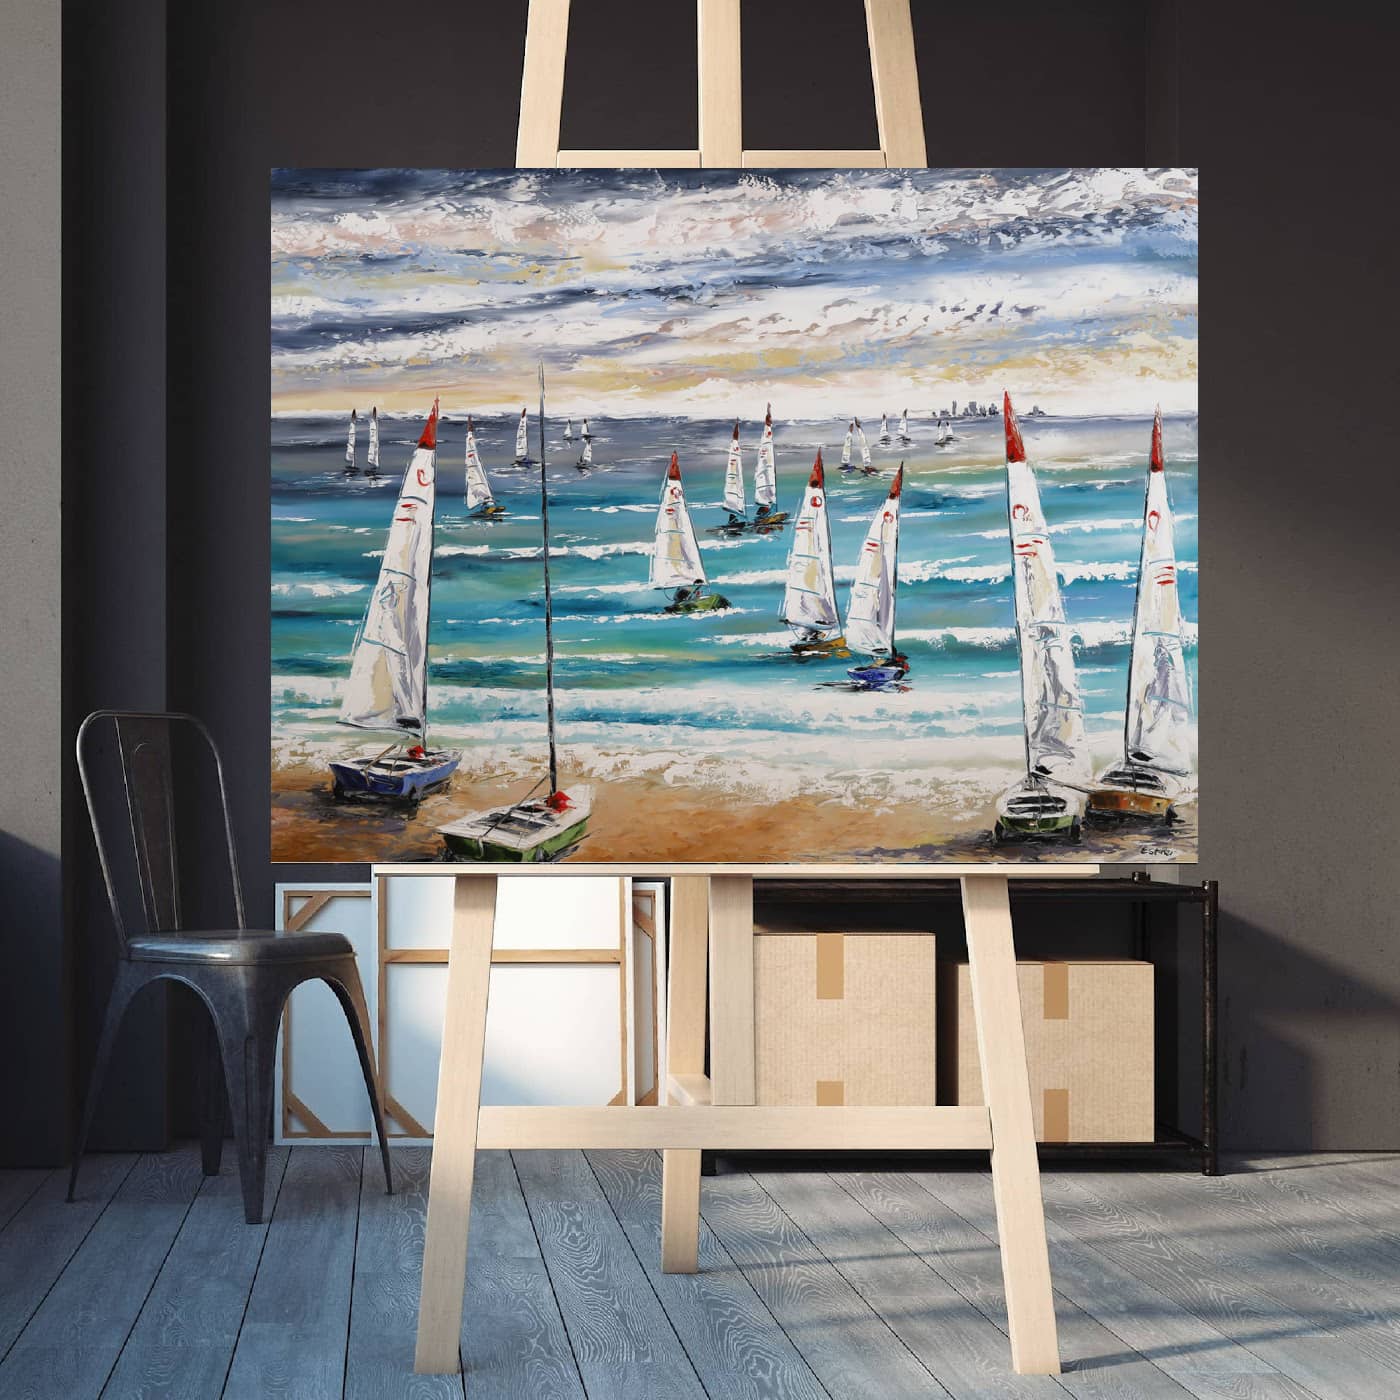 Tasmanian Based Australian Artist Esther Shohet Painting ~ 'A Day on the Bay' - Curate Art & Design Gallery Sorrento Mornington Peninsula Melbourne